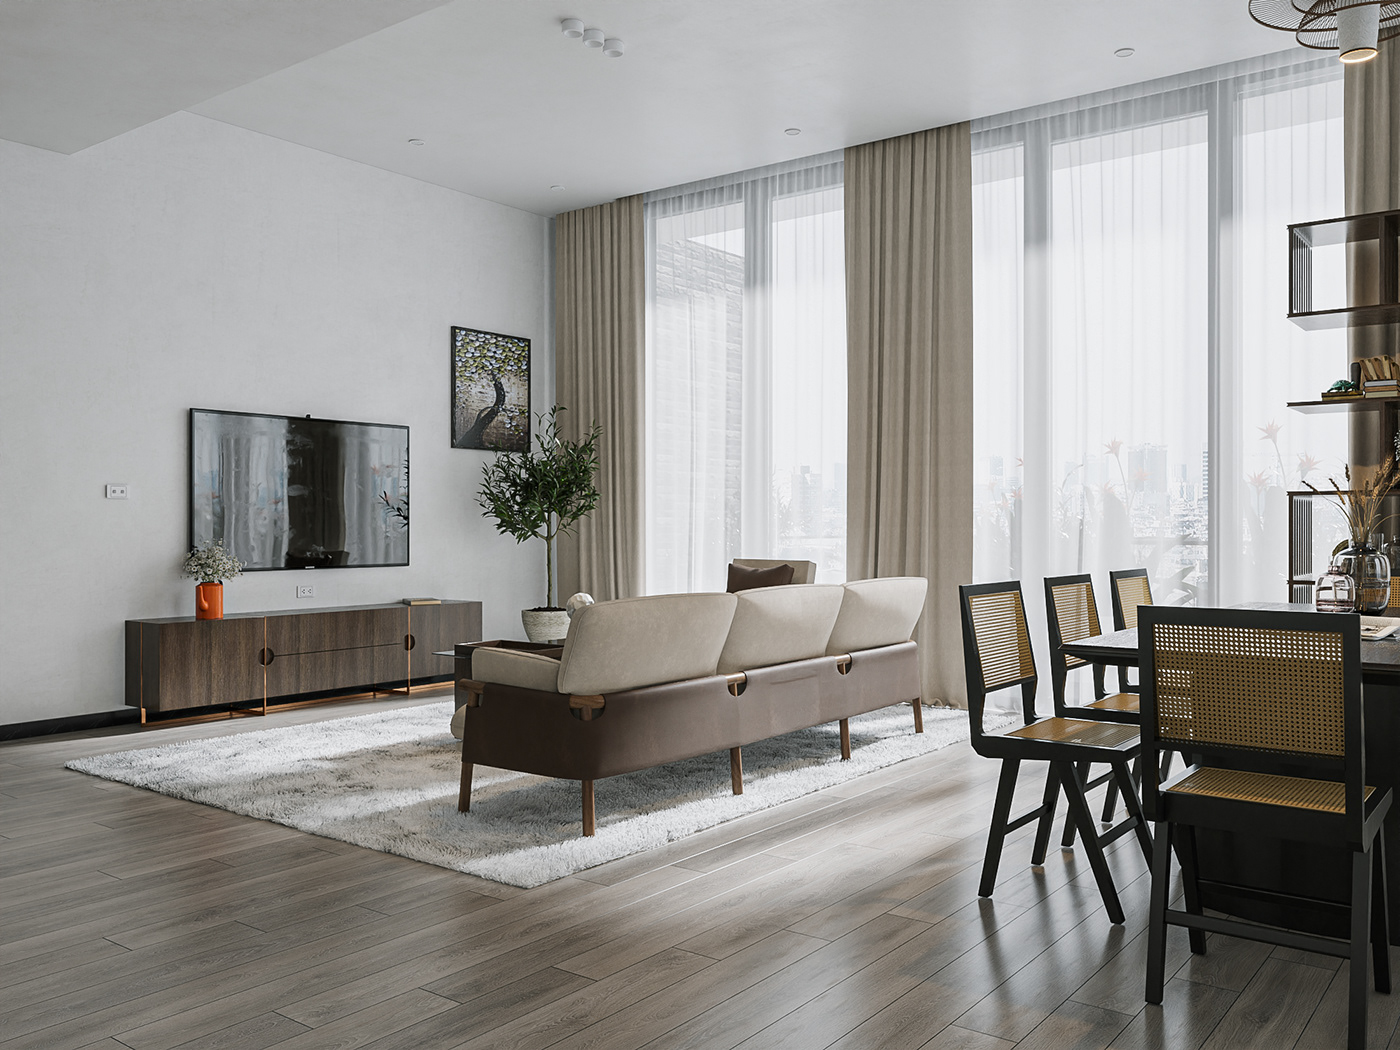 Interior architecture furniture